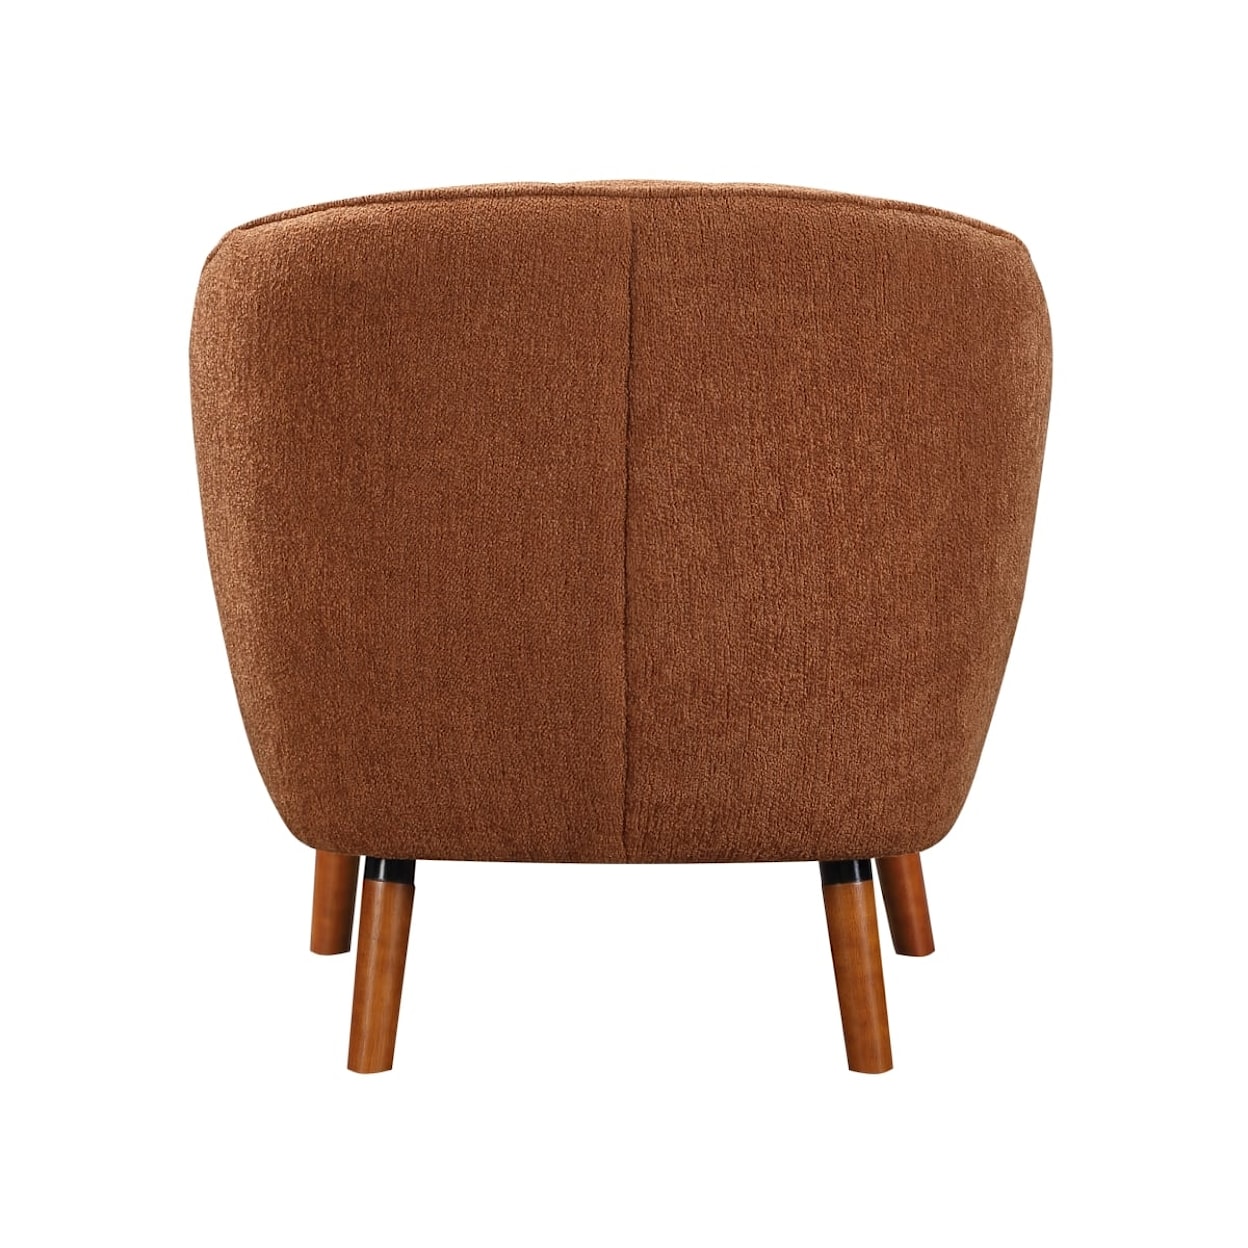 Homelegance Furniture Cutler Accent Chair